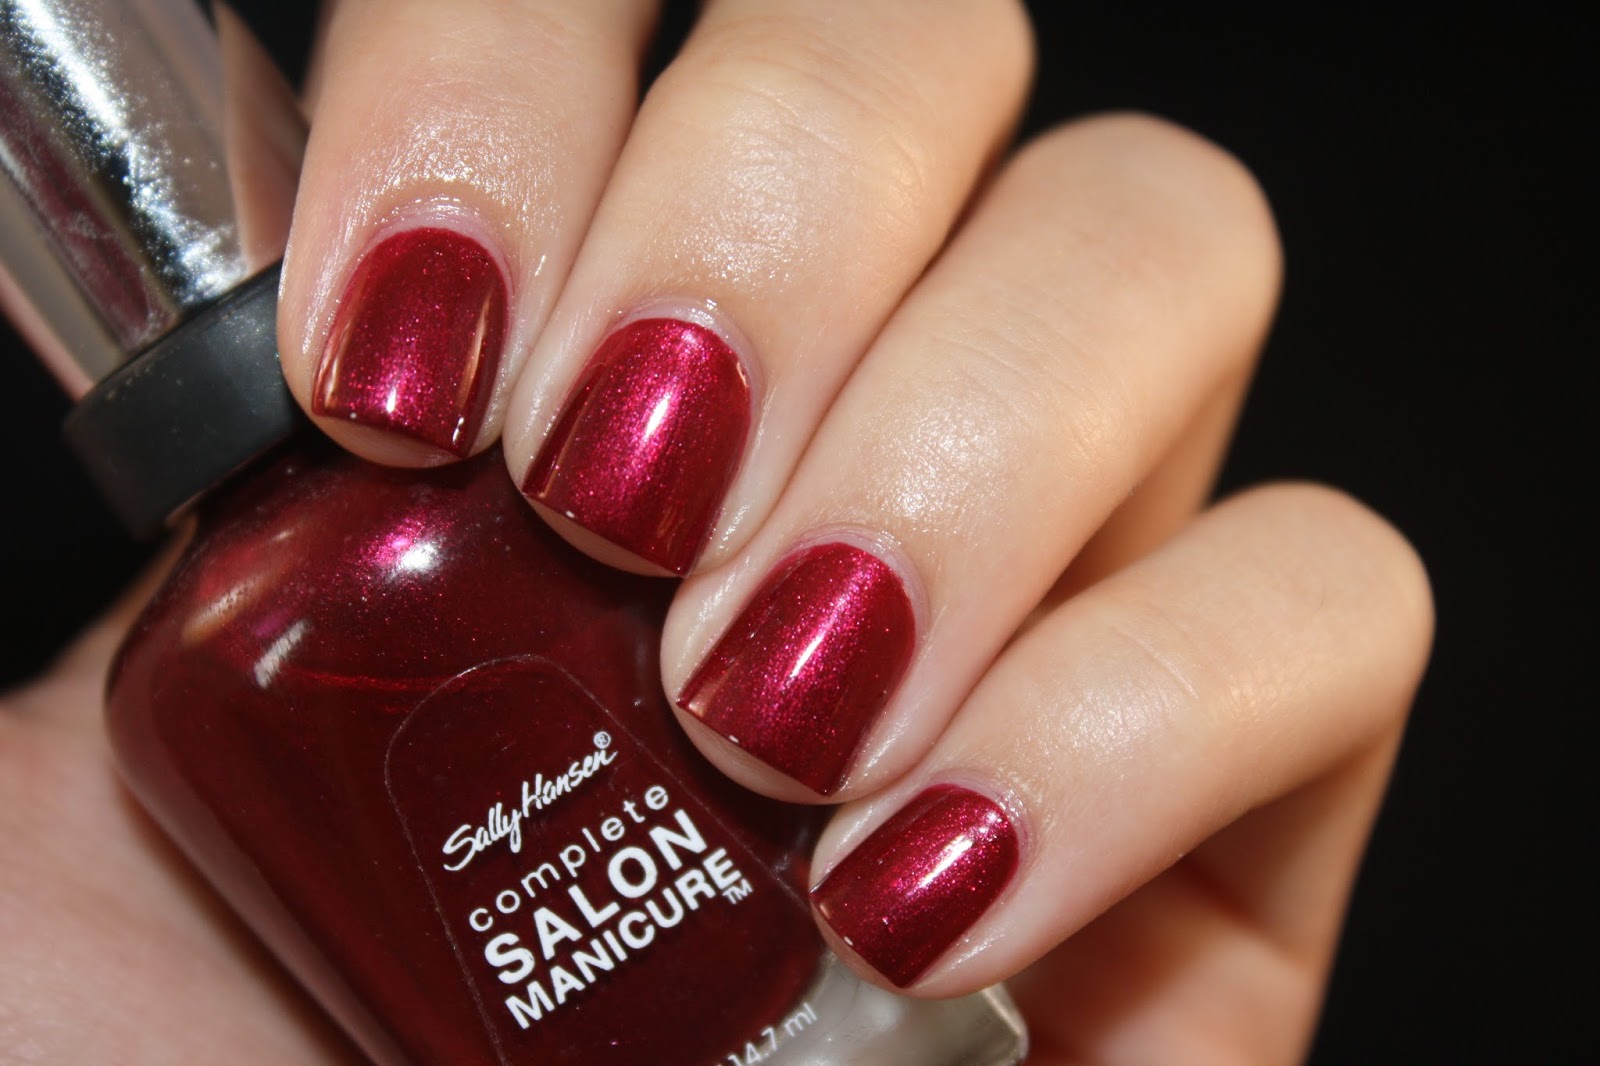 5. Sally Hansen Complete Salon Manicure Nail Polish - Wine Not - wide 4